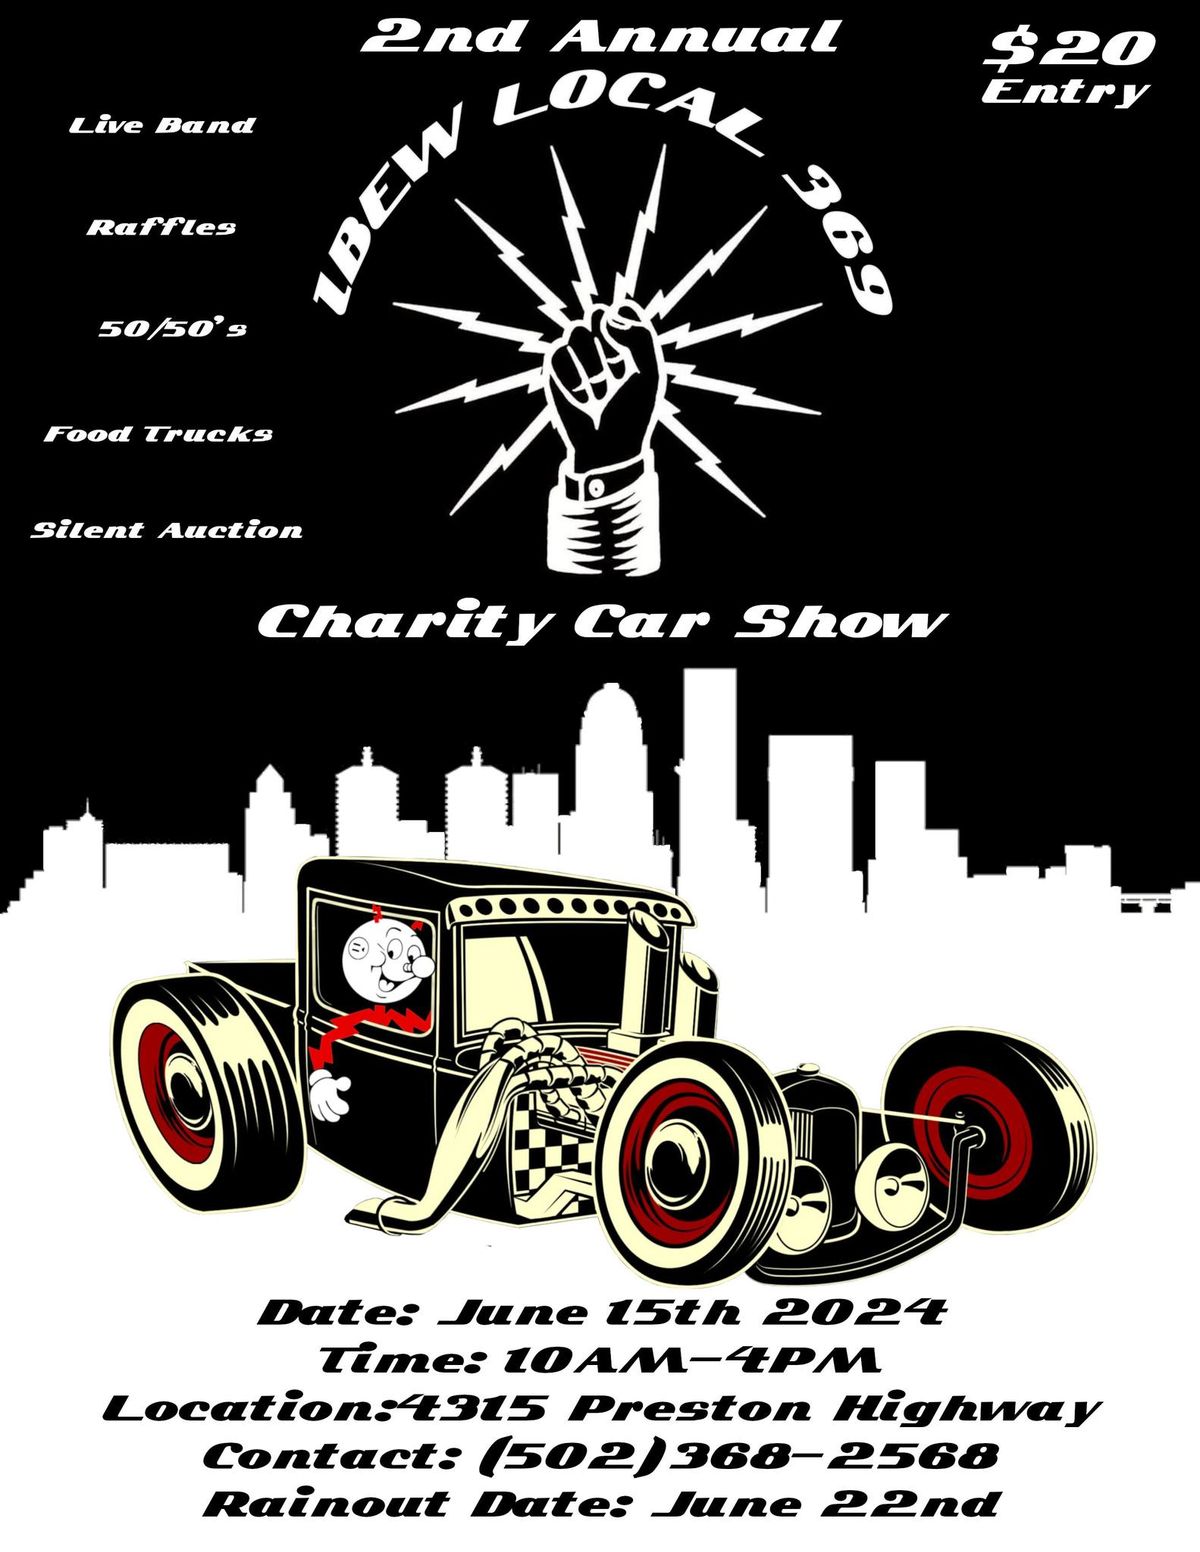 2nd Annual Local 369 Charity Car Show